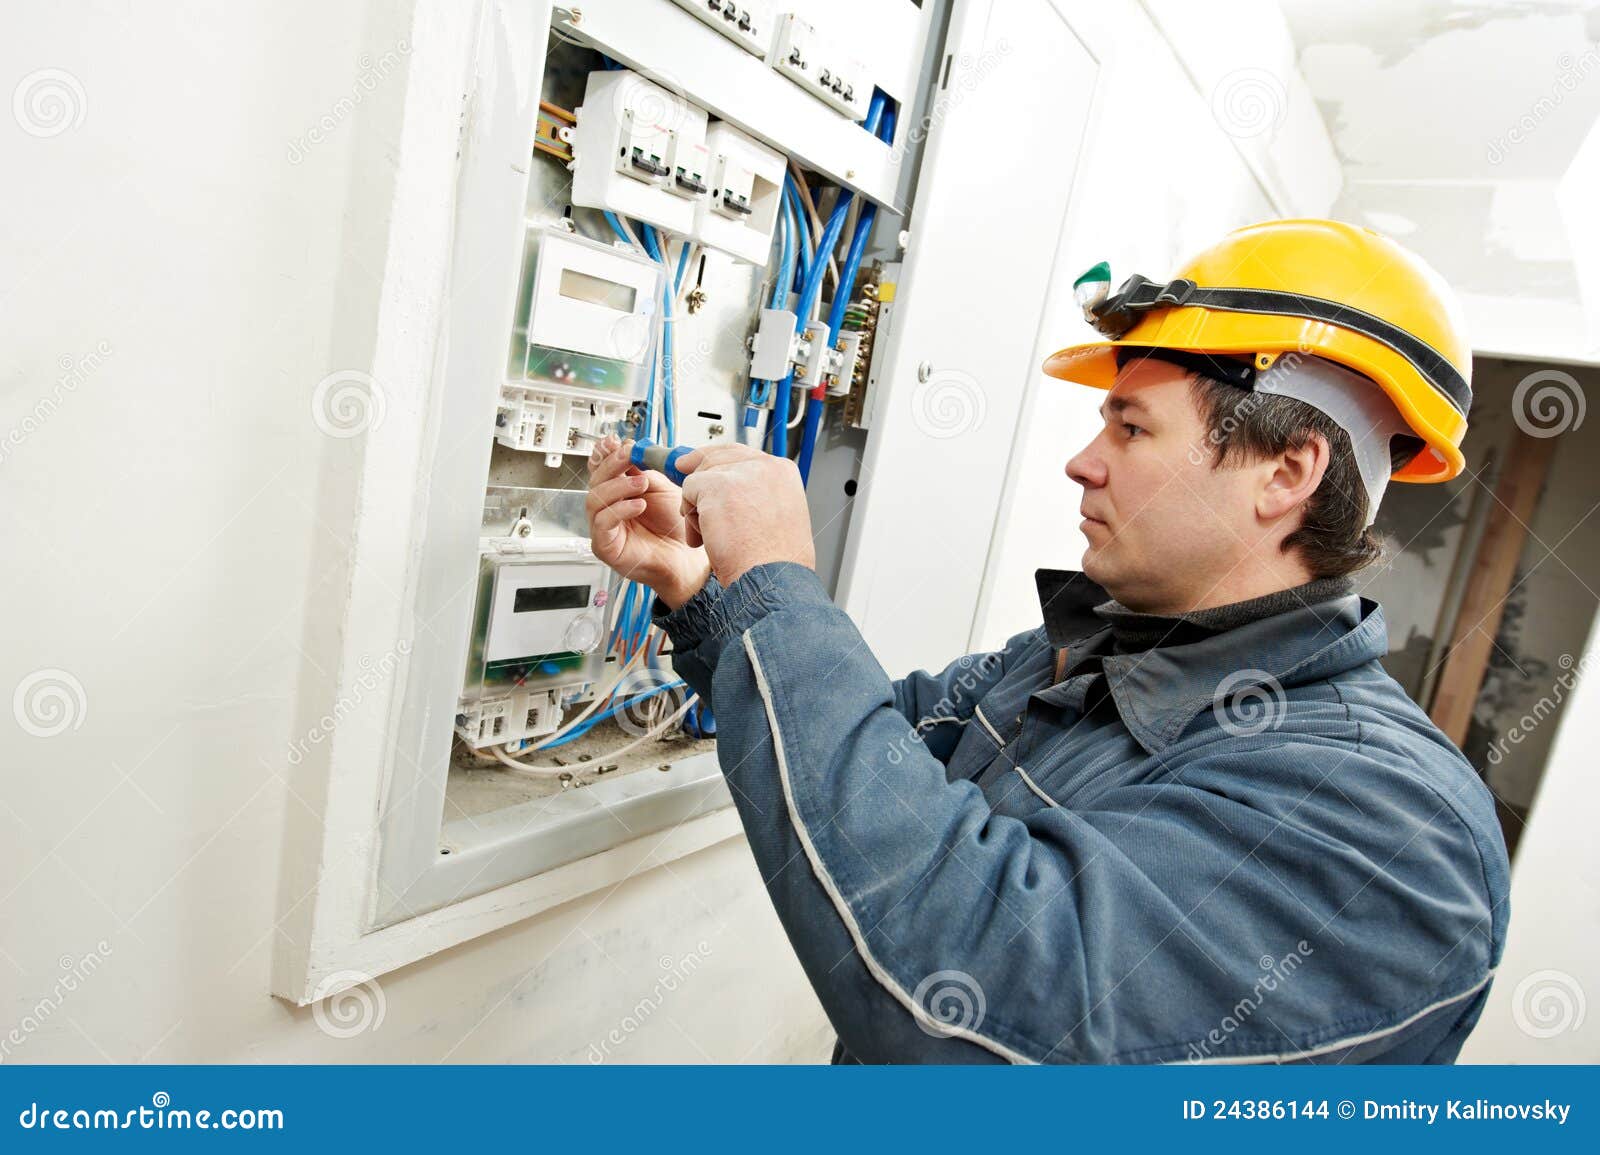 electrician installing energy saving meter